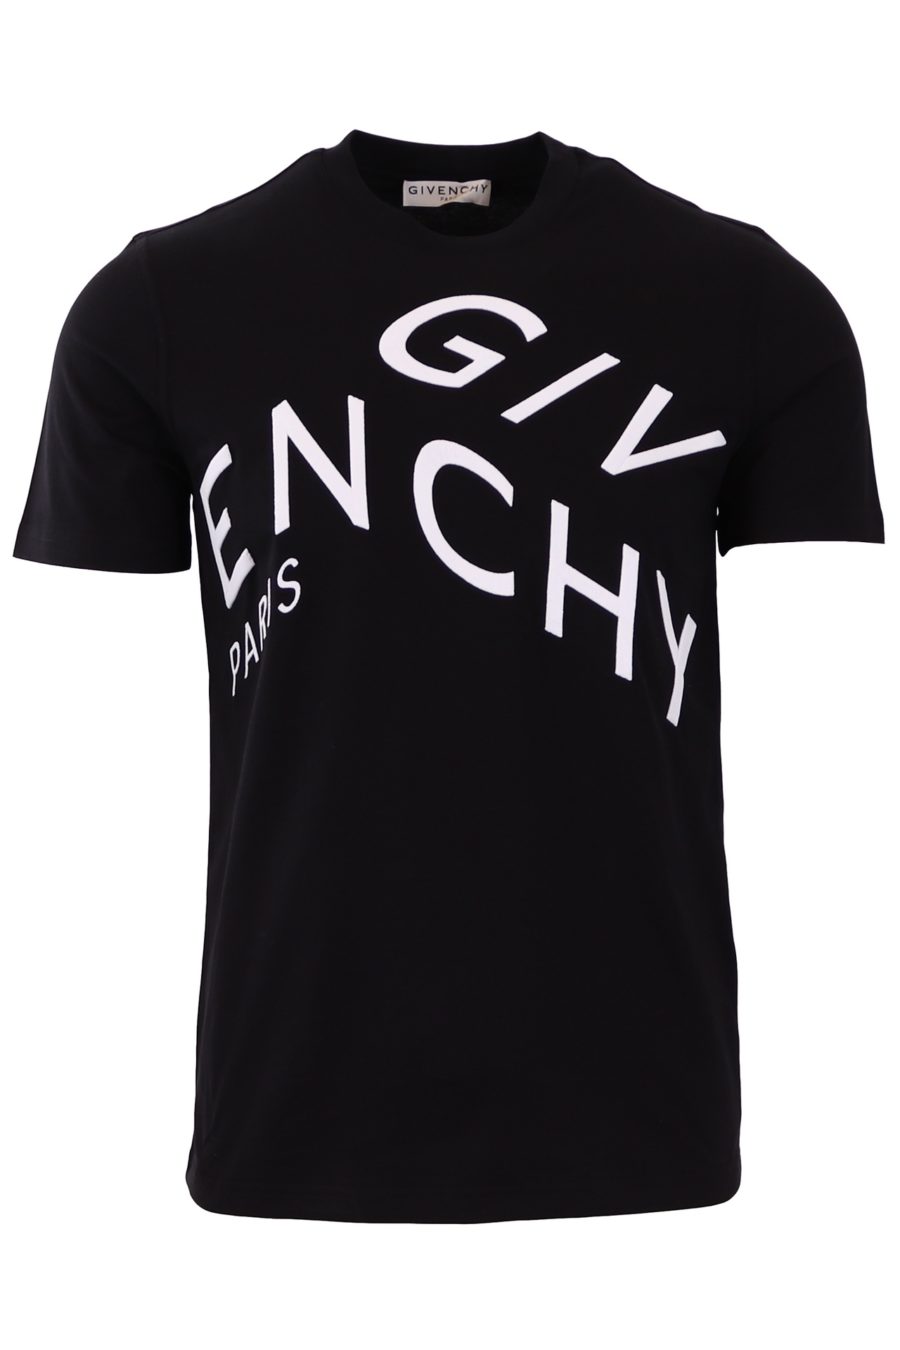 Camiseta Givenchy negra slim fit logo bordado - cf4733a05eb4e06fb4b130d0789d14d313ff3d55